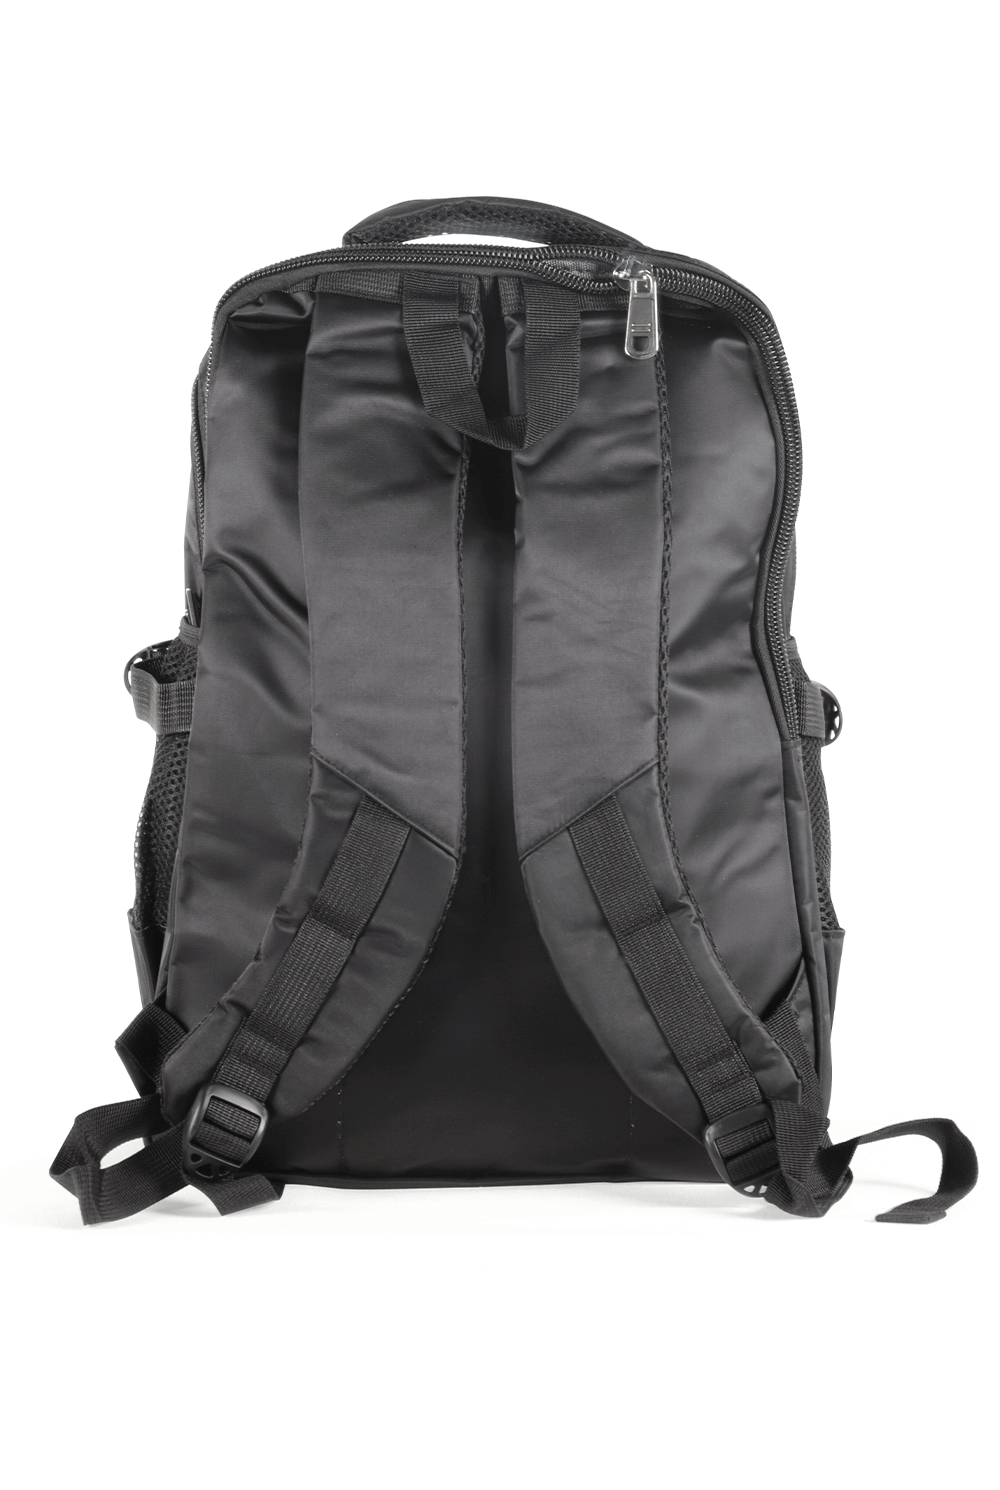 Unisex Backpack School Bag – Thilakawardhana